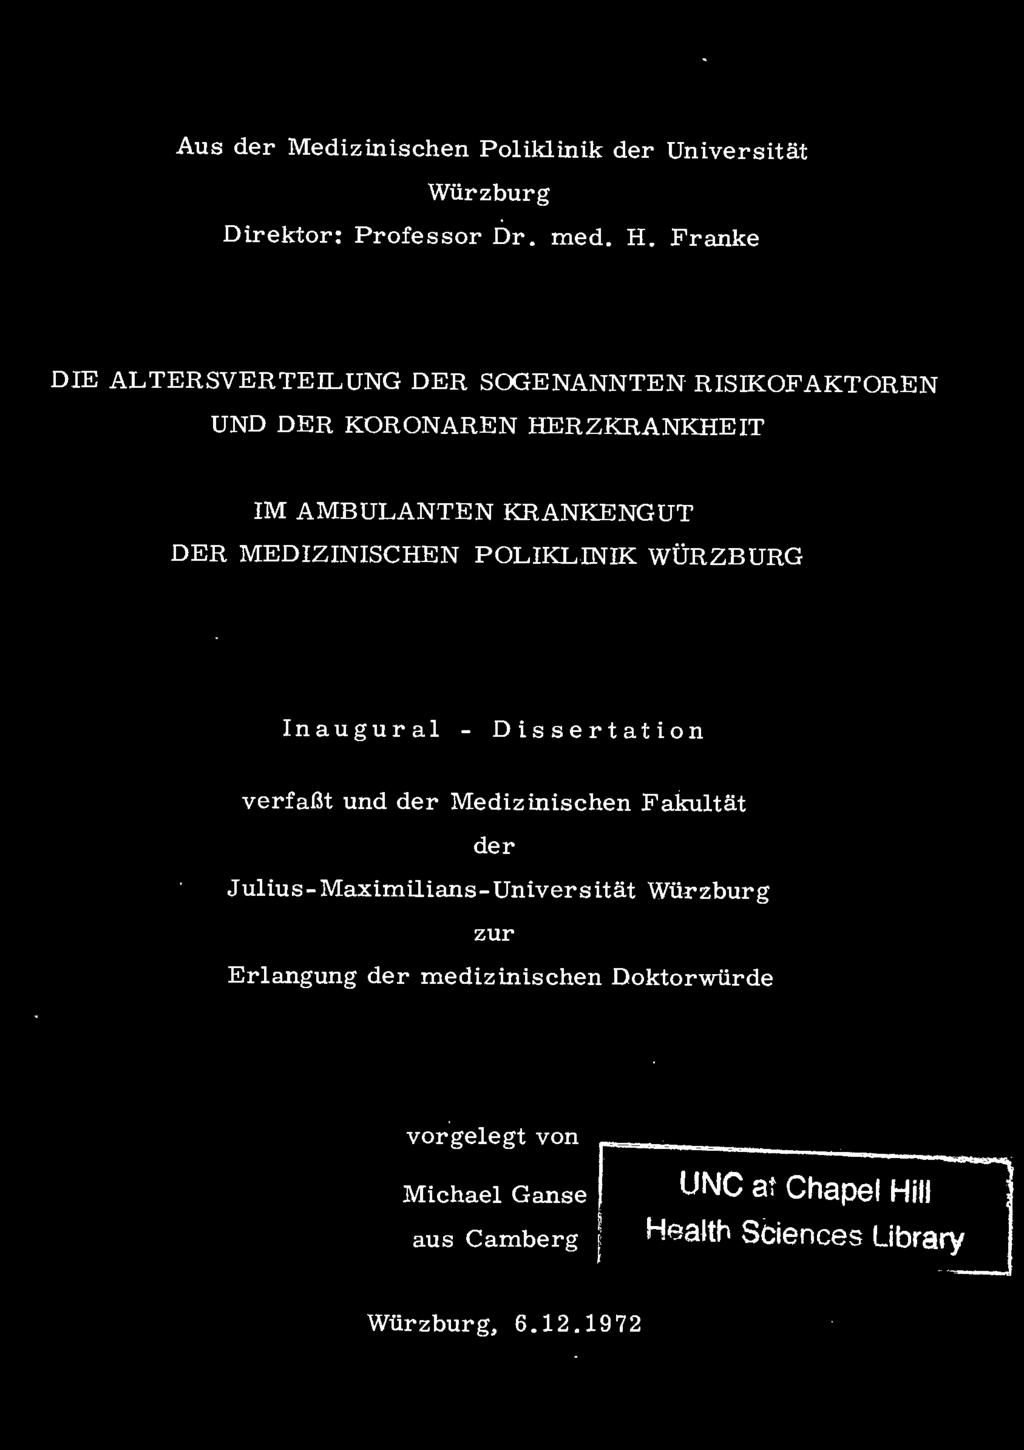 Julius-Maximilians-Universitat Wilrzburg Erlangung medizinischen Doktorwiirde